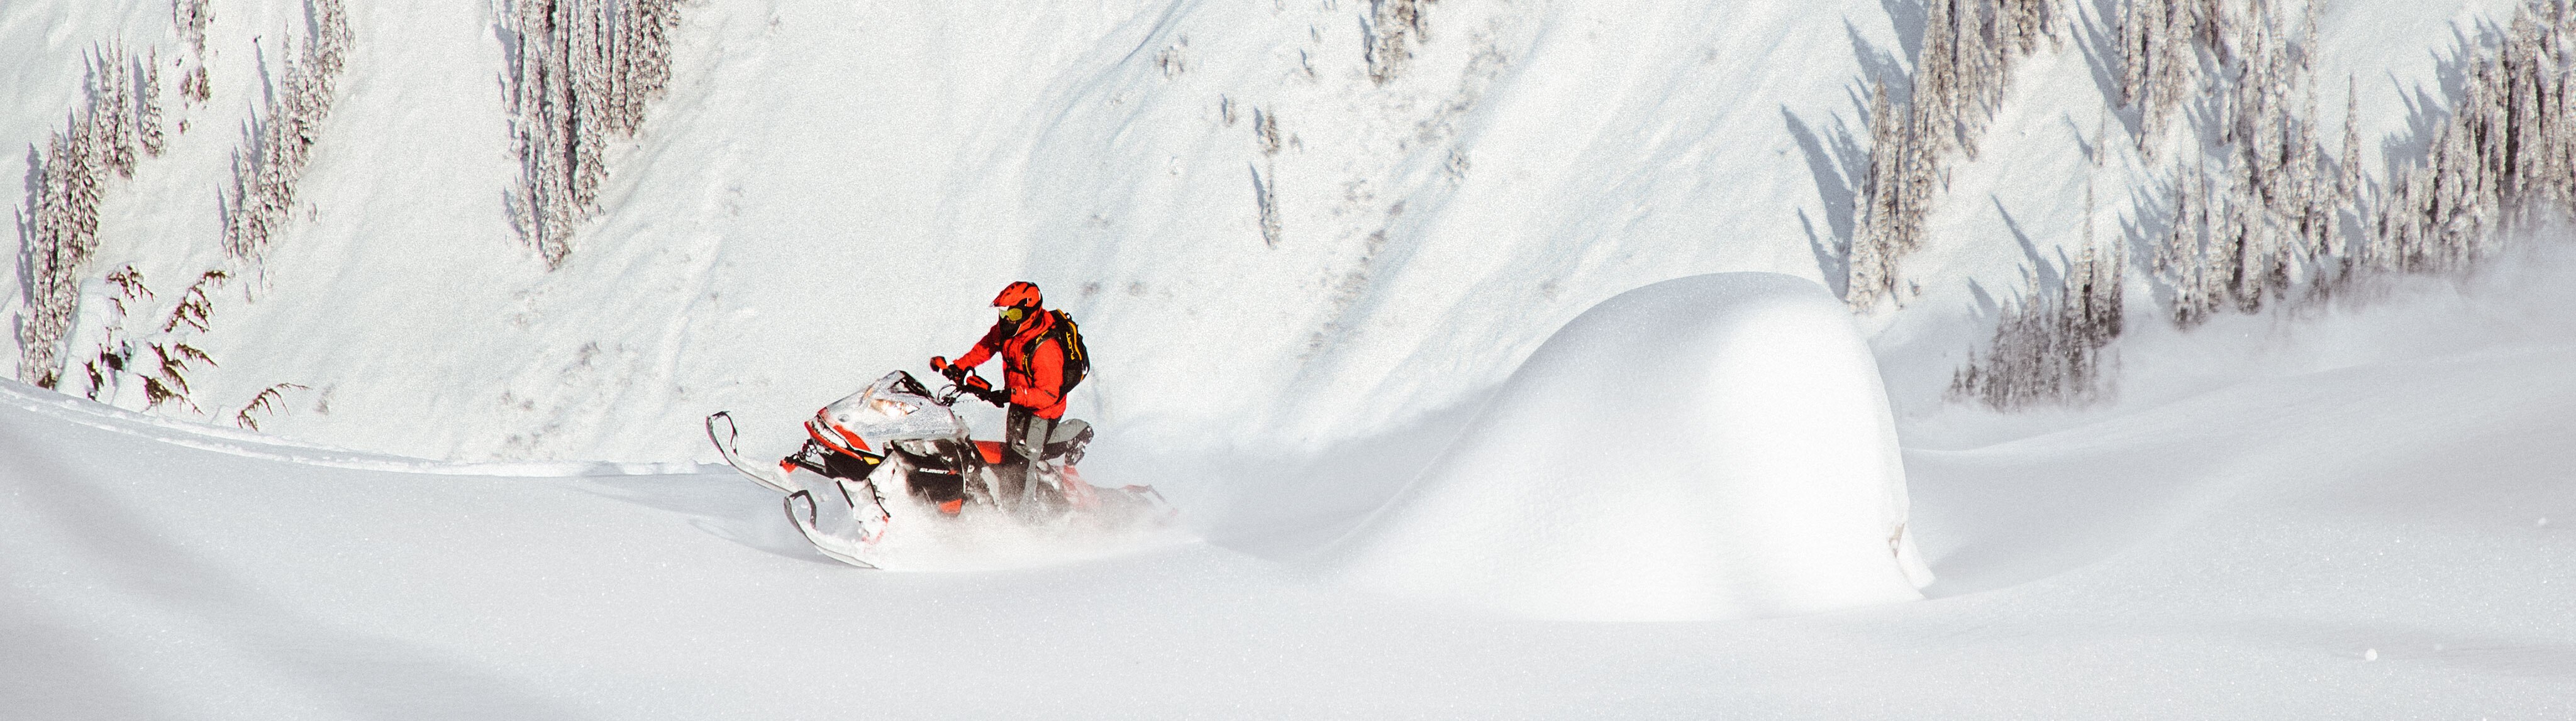 Man riding a Ski-Doo snowmobile in Deep-Snow